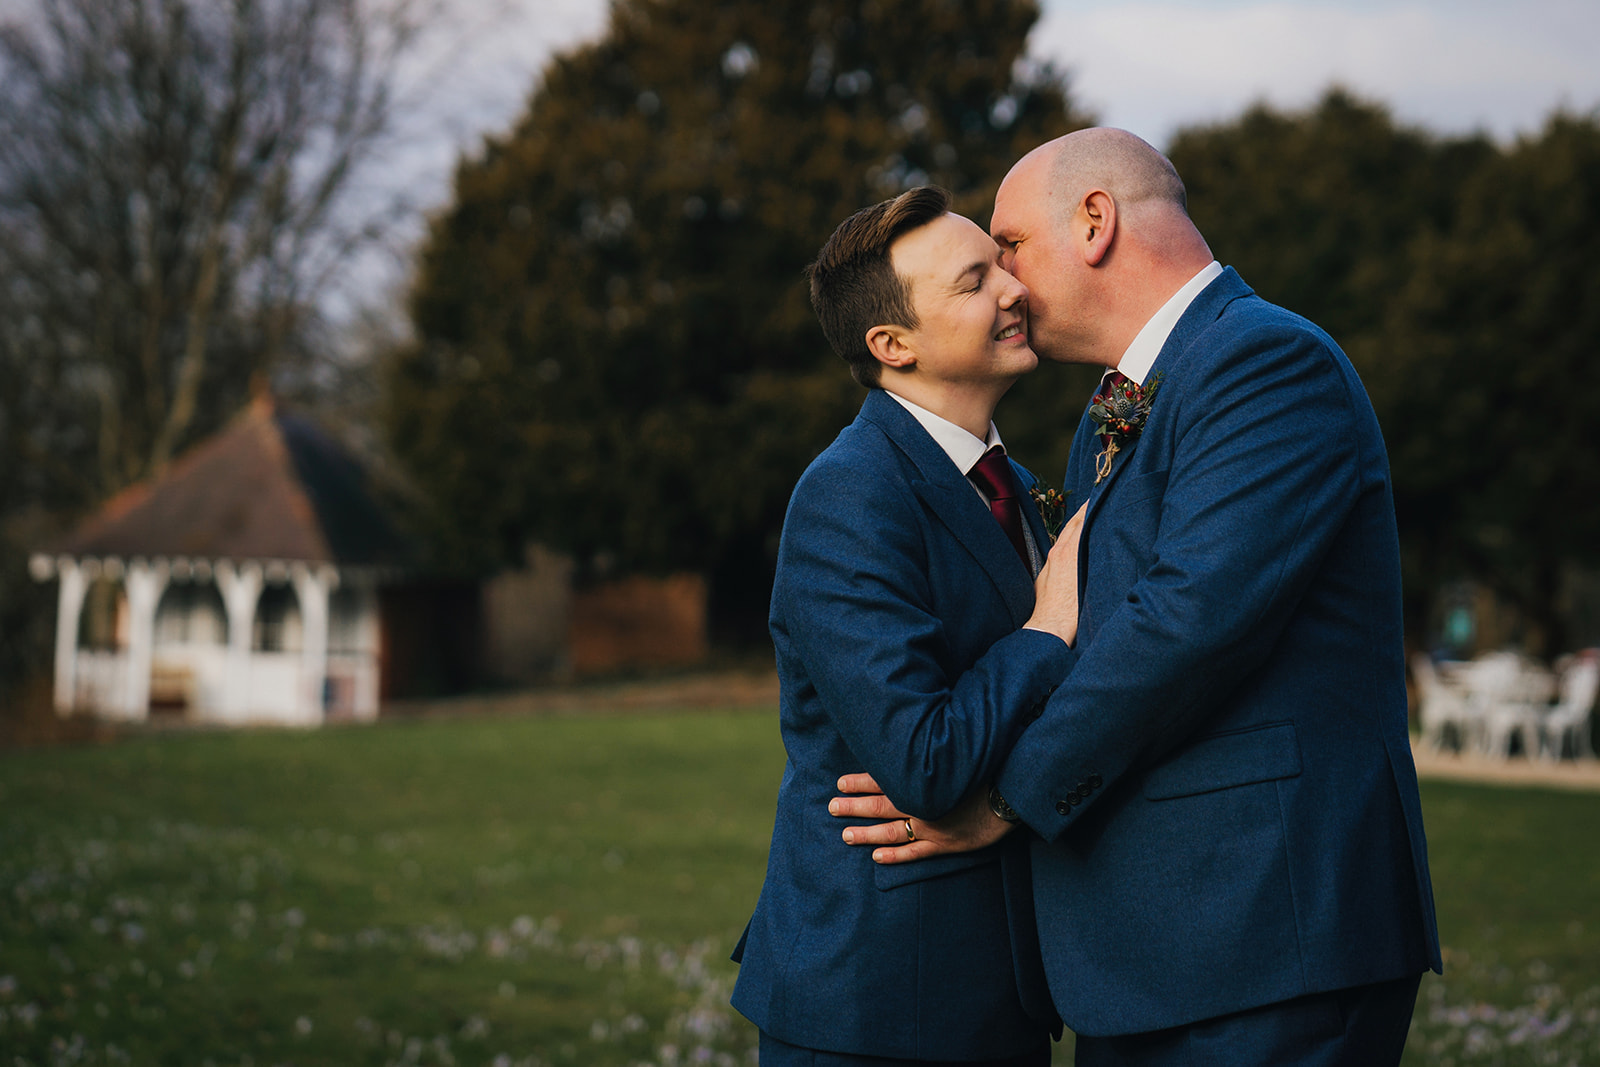 the groom kisses his husband on the cheek